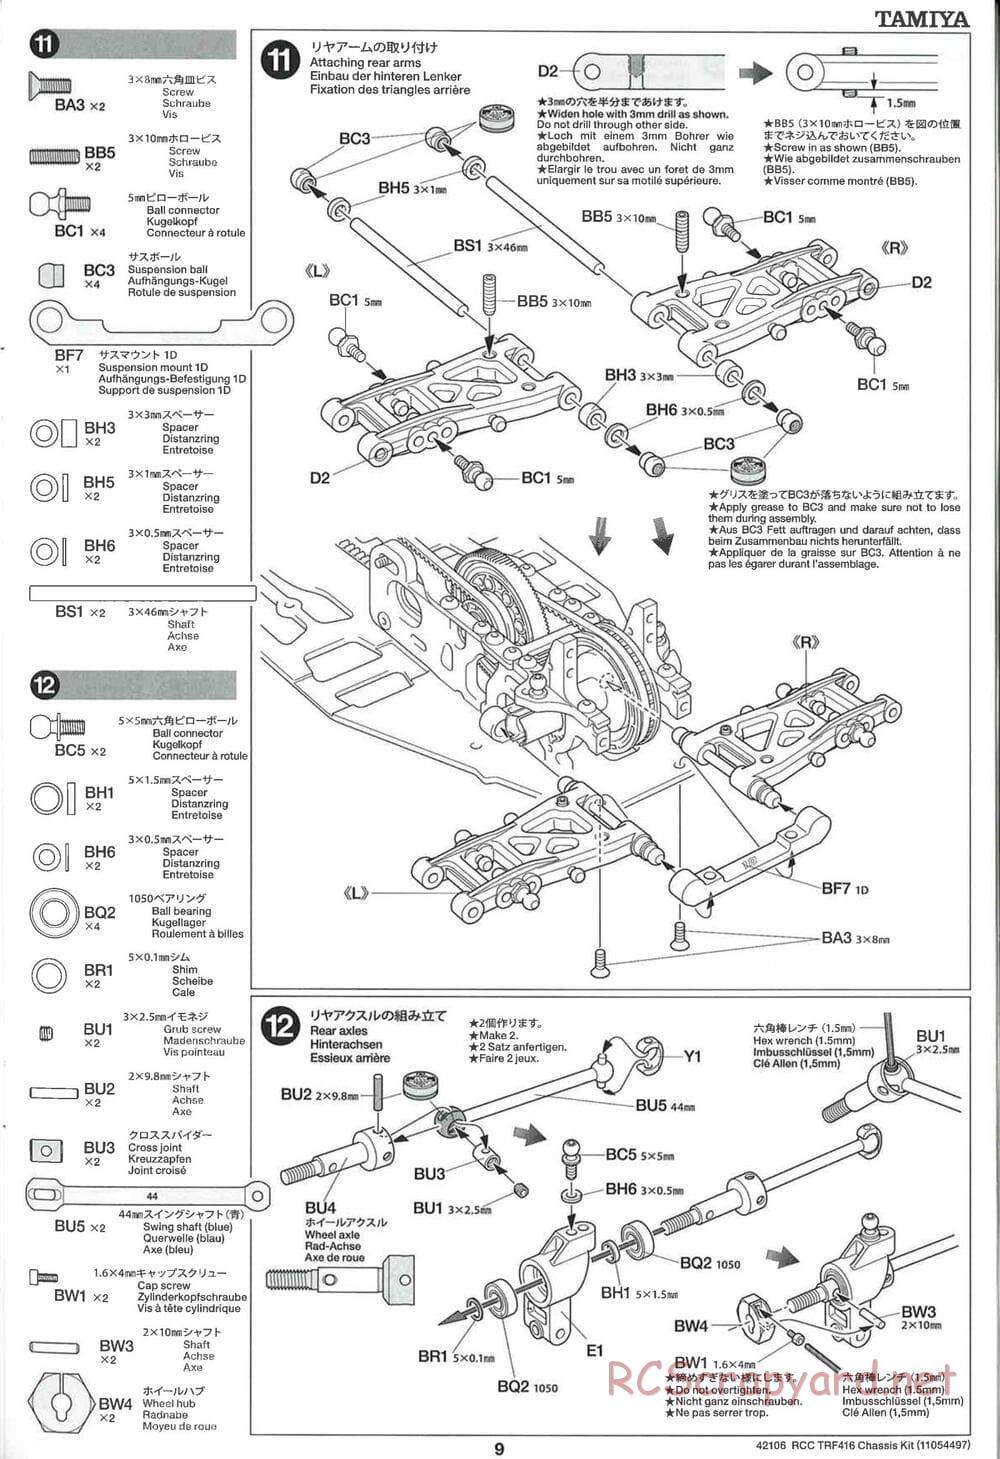 Tamiya - TRF416 Chassis - Manual - Page 9